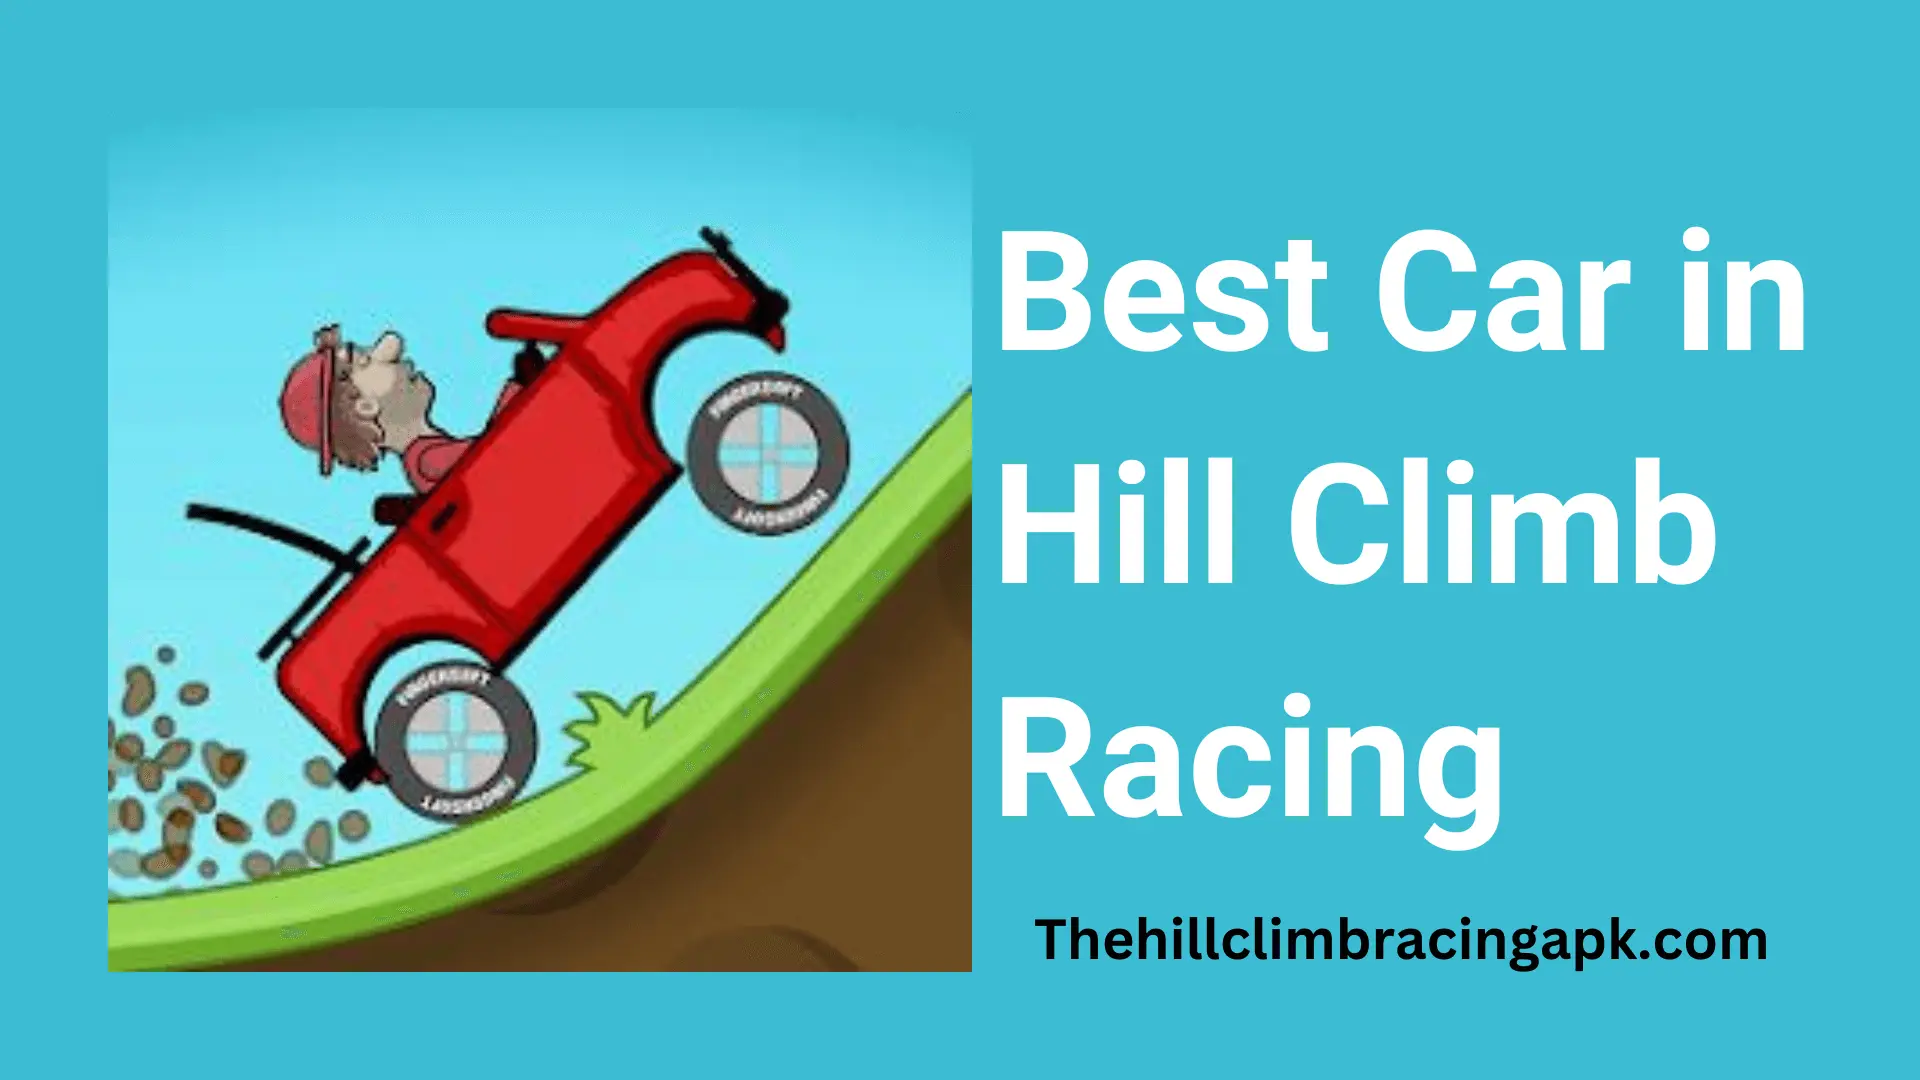 TOP BEST VEHICLES 1-38 RATING - Hill Climb Racing 